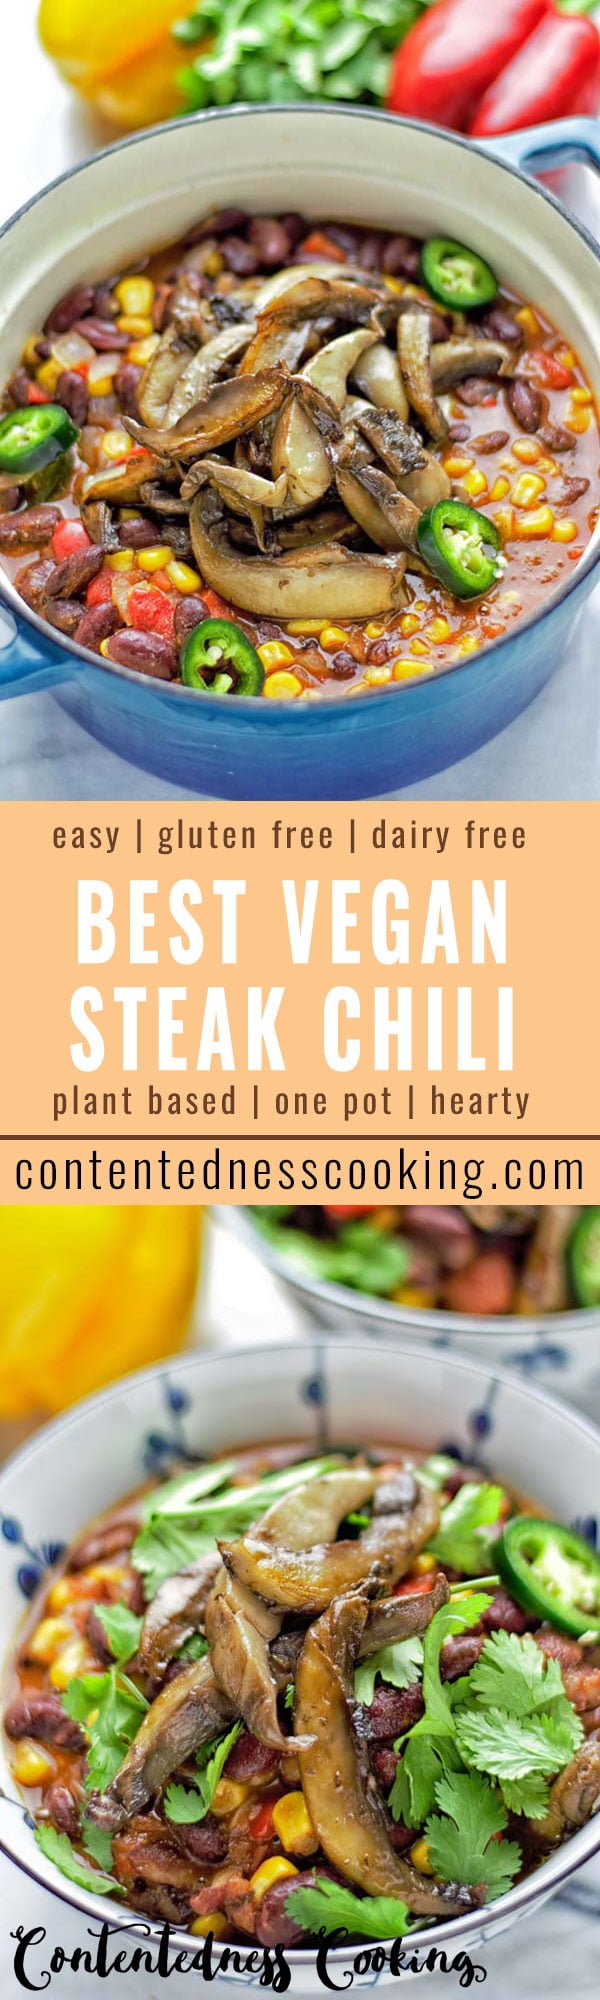 Vegan Steak Chili | #vegan #glutenfree #contentednesscooking